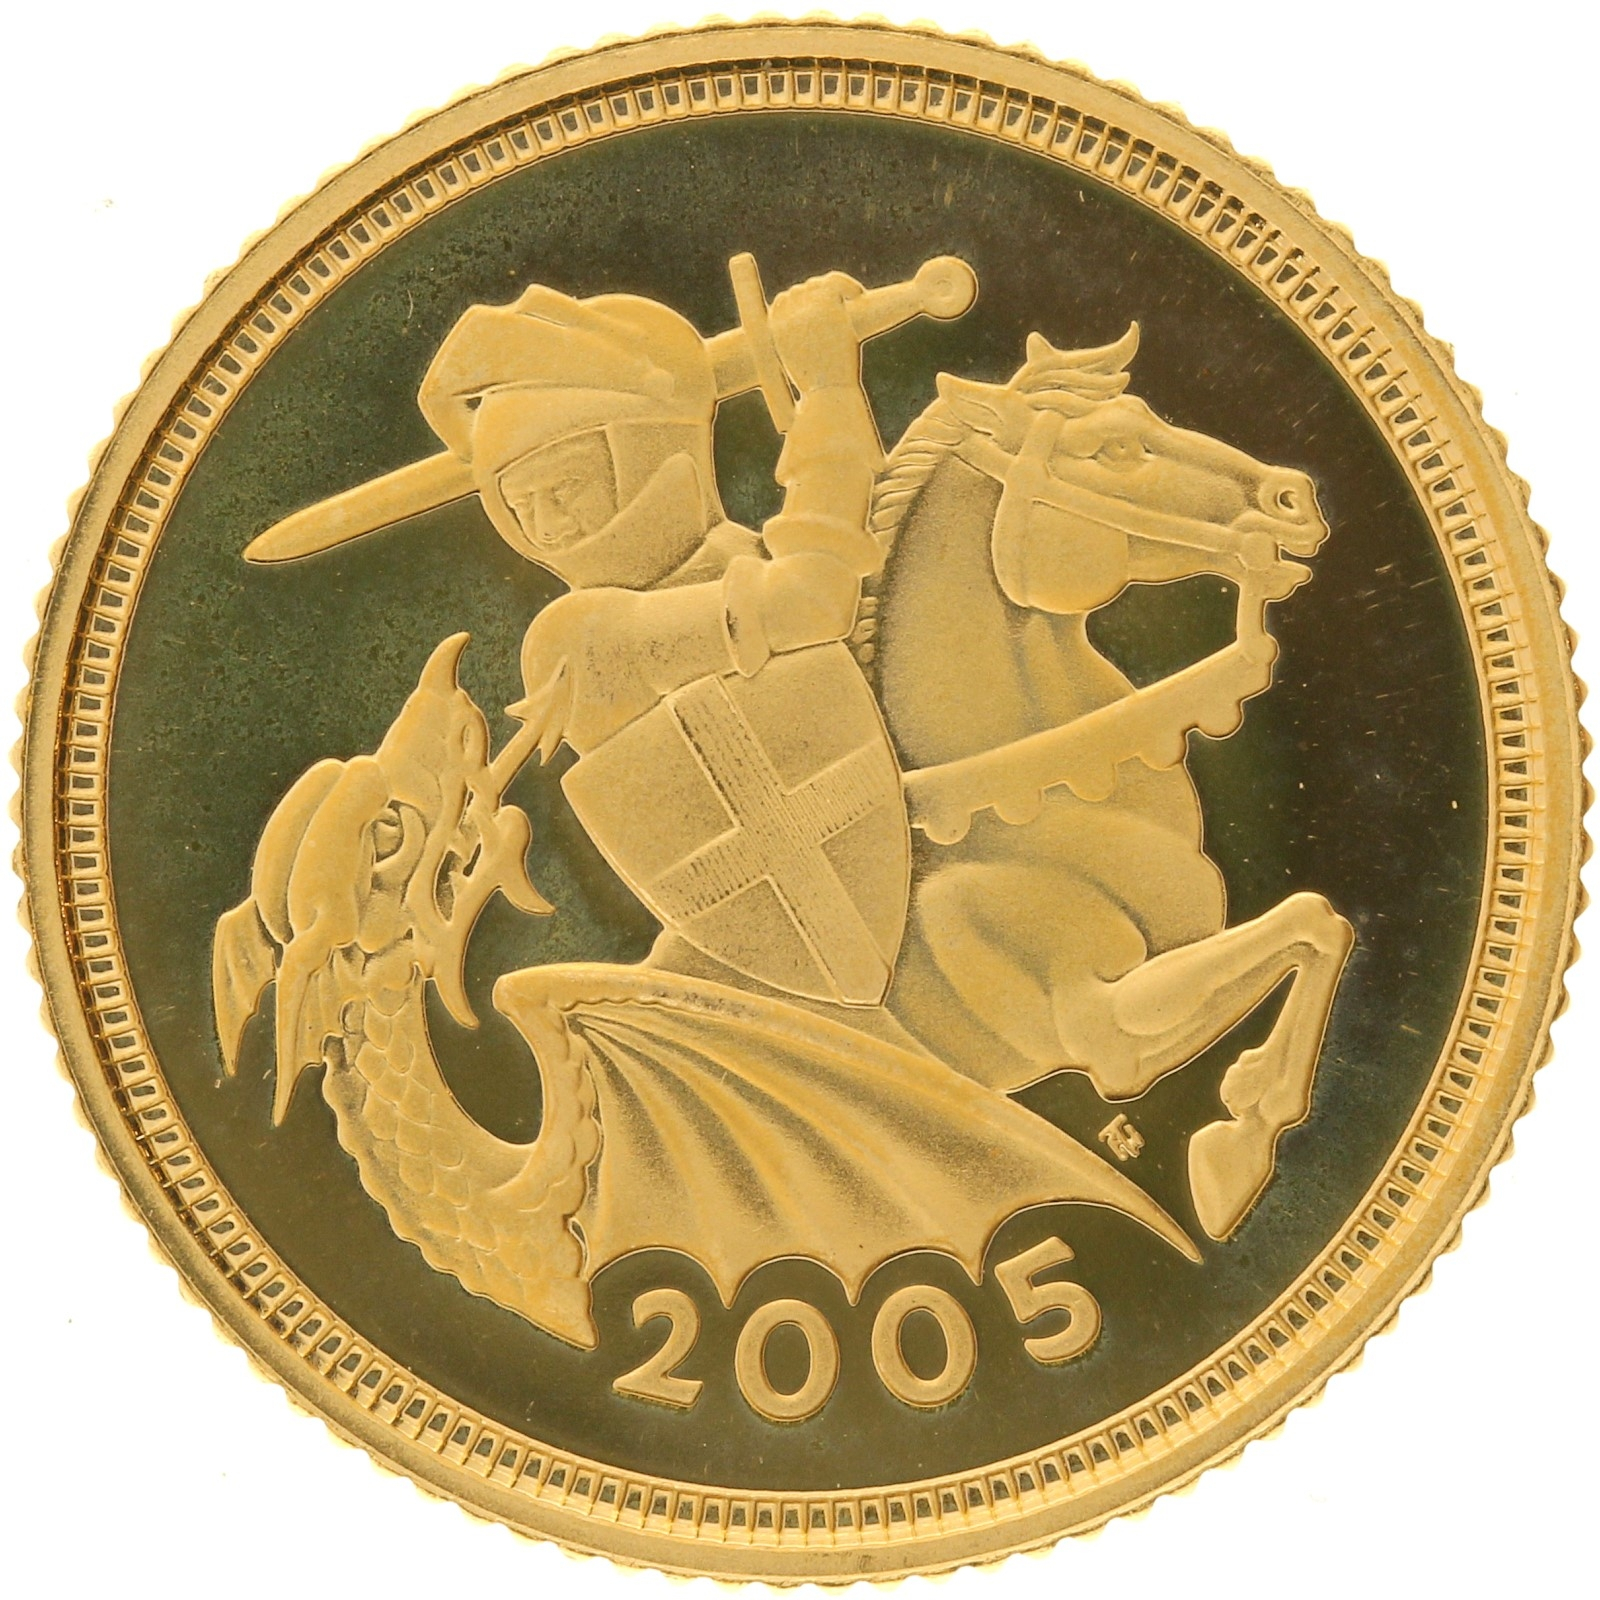 United Kingdom - 1/2 sovereign - 2005 - PROOF - Elizabeth II